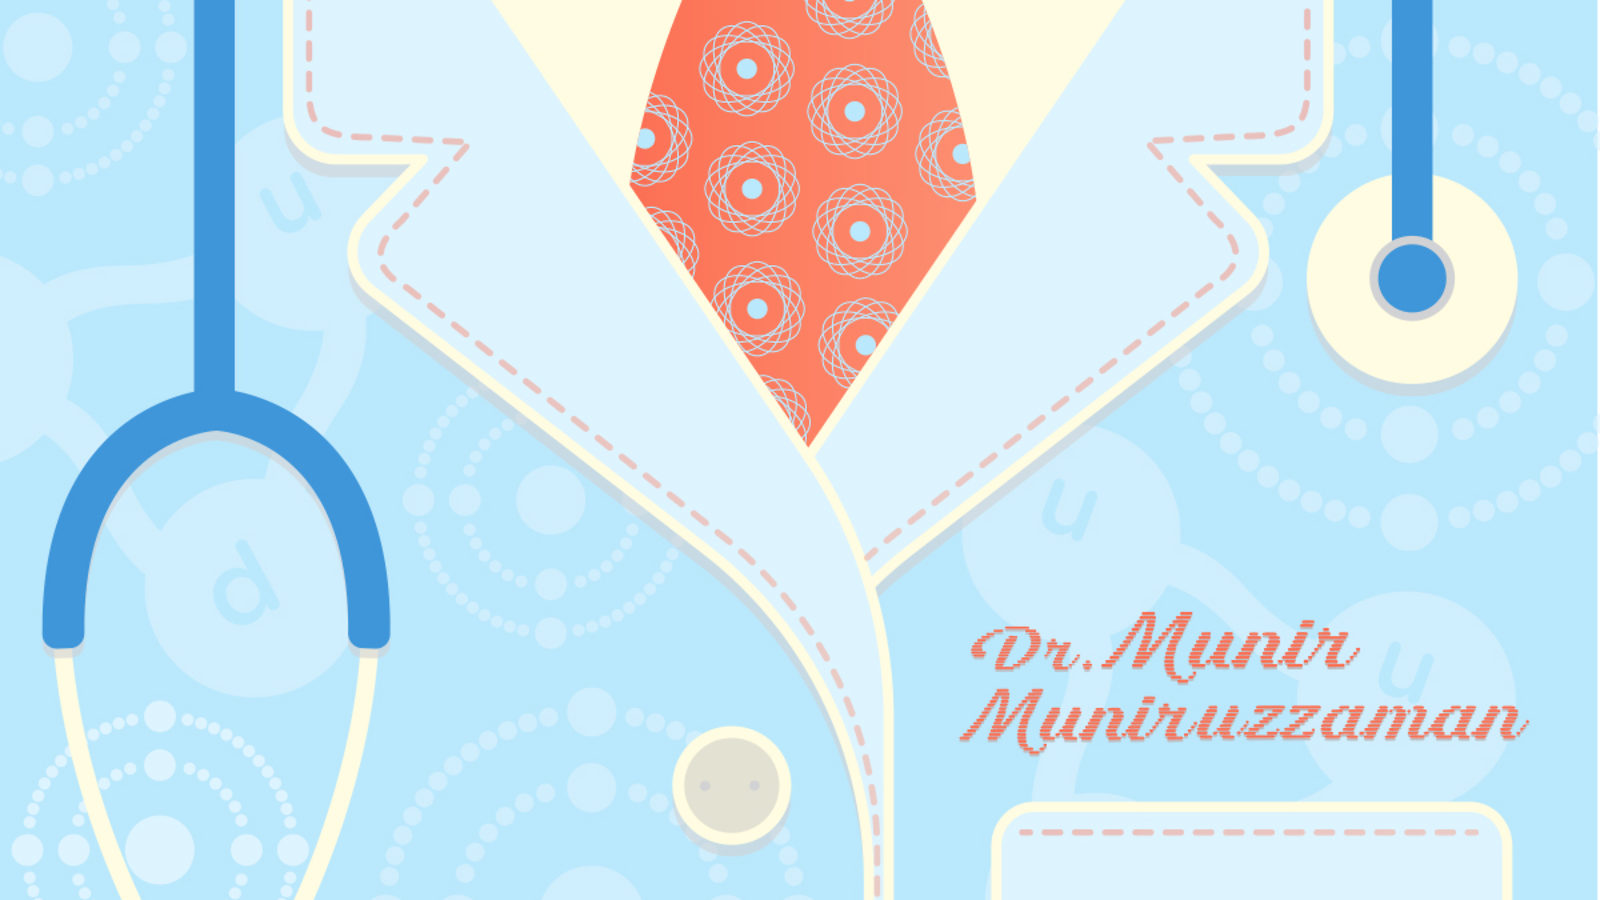 Illustration of Munir Muniruzzaman's chest in doctors coat, tie, and stethoscope